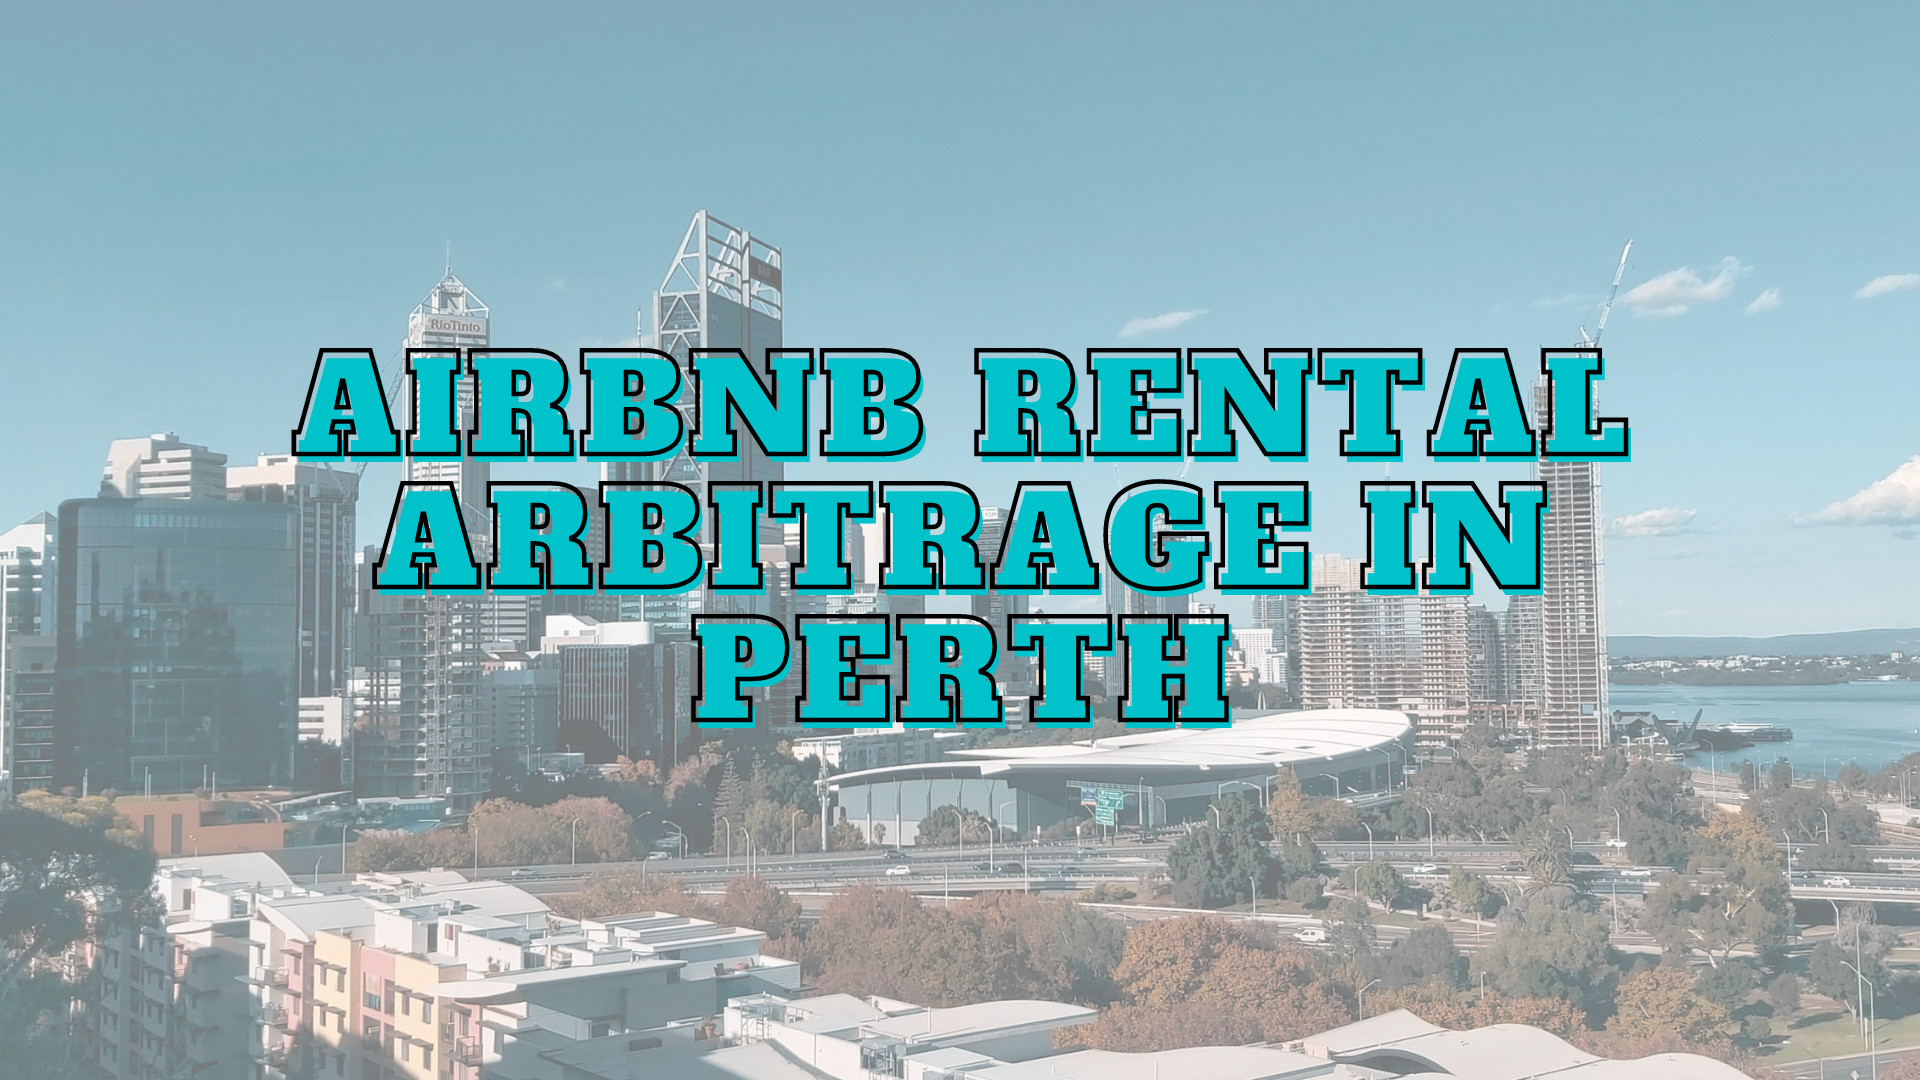 Perth airbnb rental arbitrage